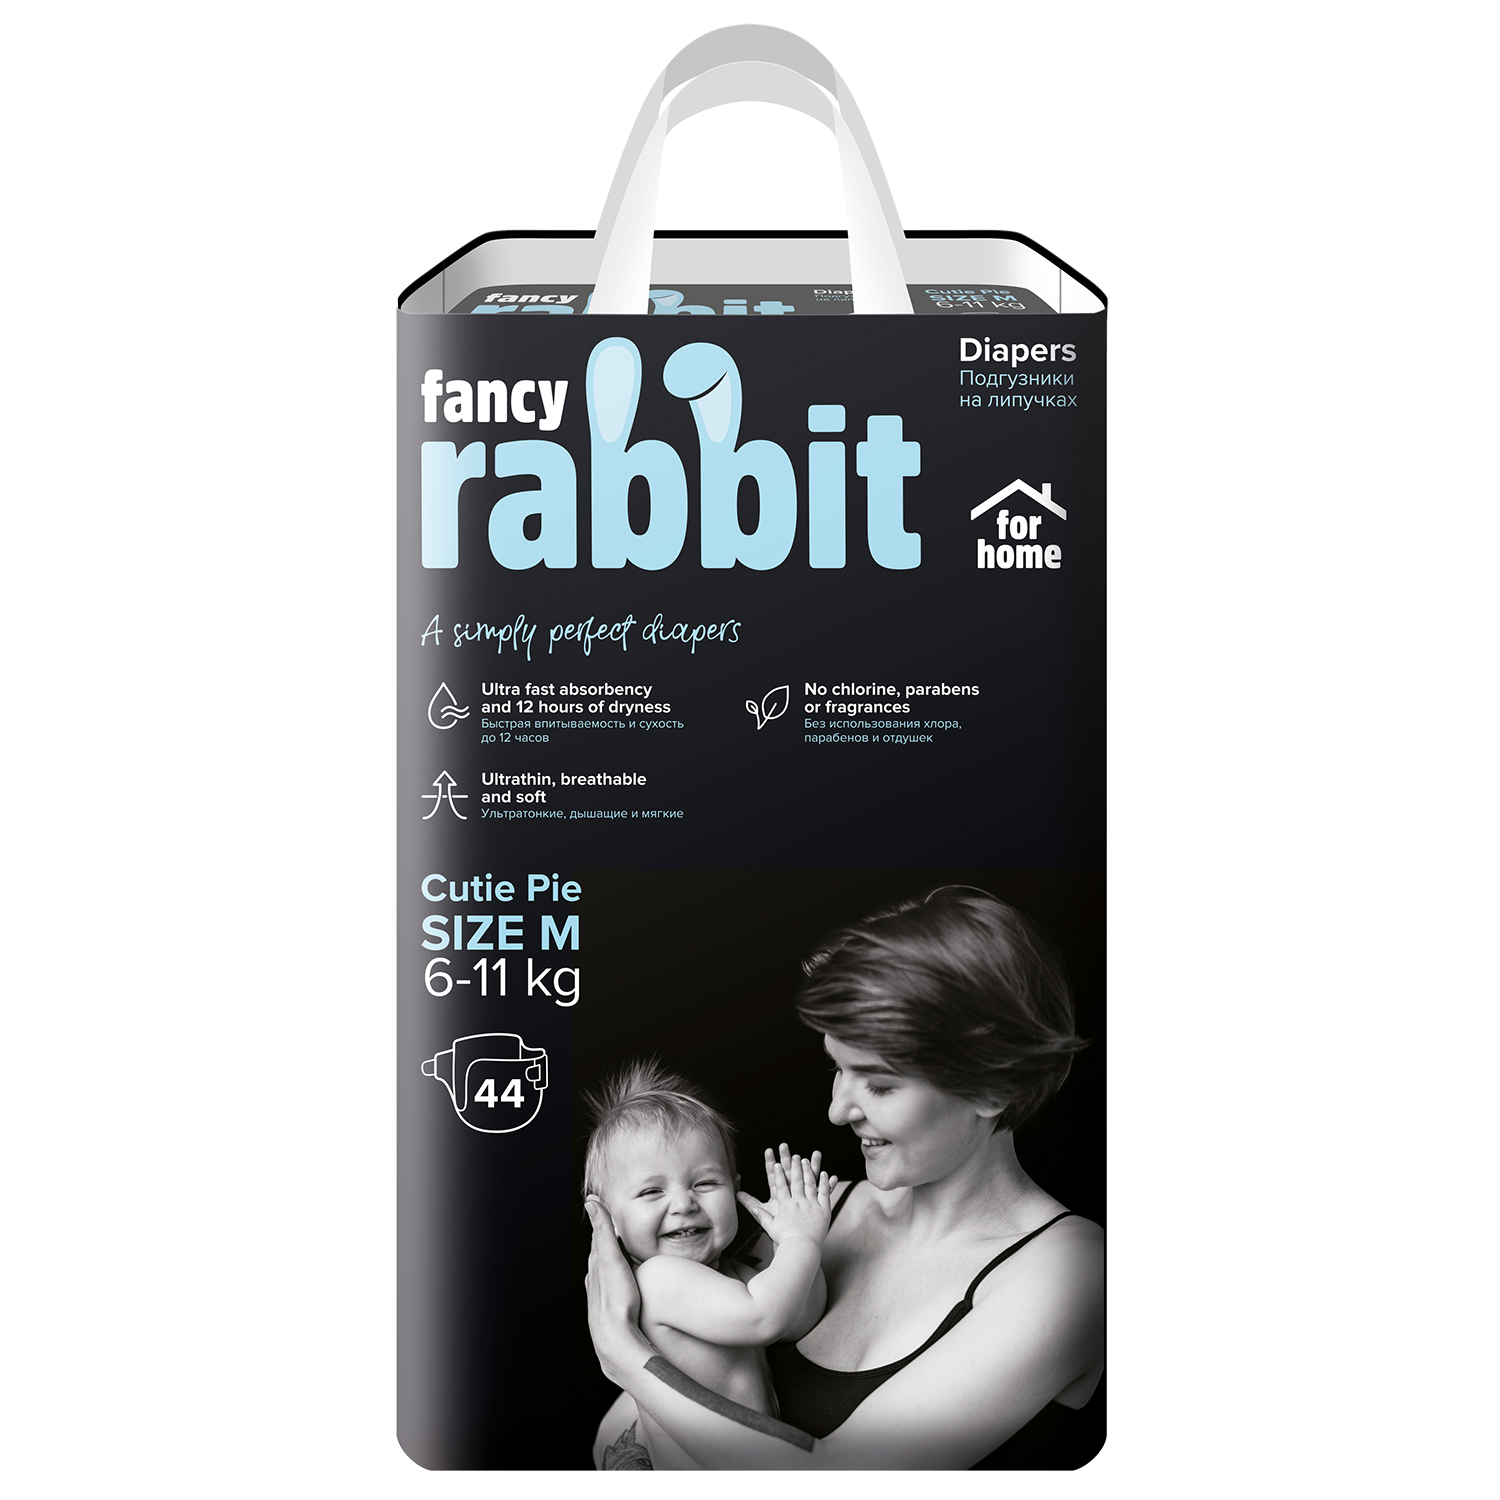 Трусики-подгузники Fancy Rabbit for home 6-11 кг, размер М, 44 шт подгузники fancy rabbit for home xs 0 5 кг 44 шт